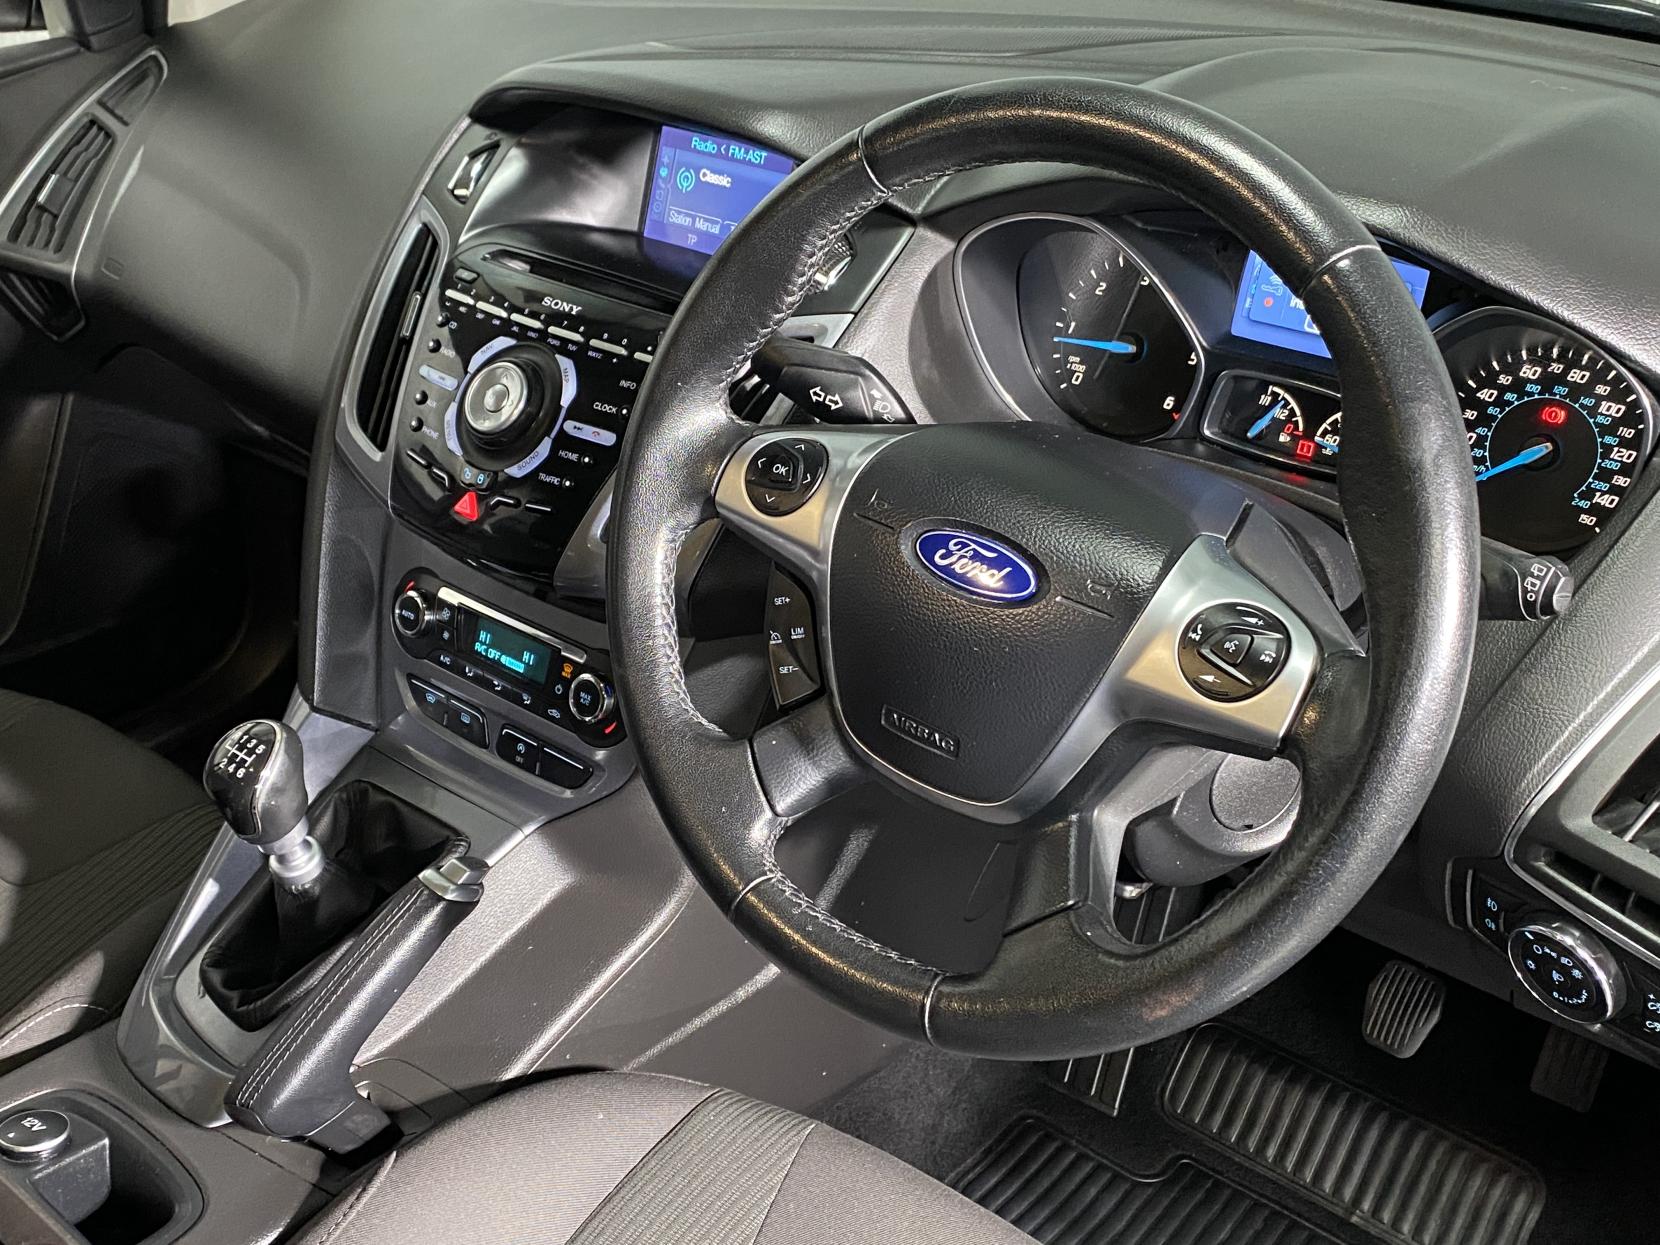 Ford Focus 1.6 TDCi Titanium Navigator Hatchback 5dr Diesel Manual Euro 5 (s/s) (115 ps)